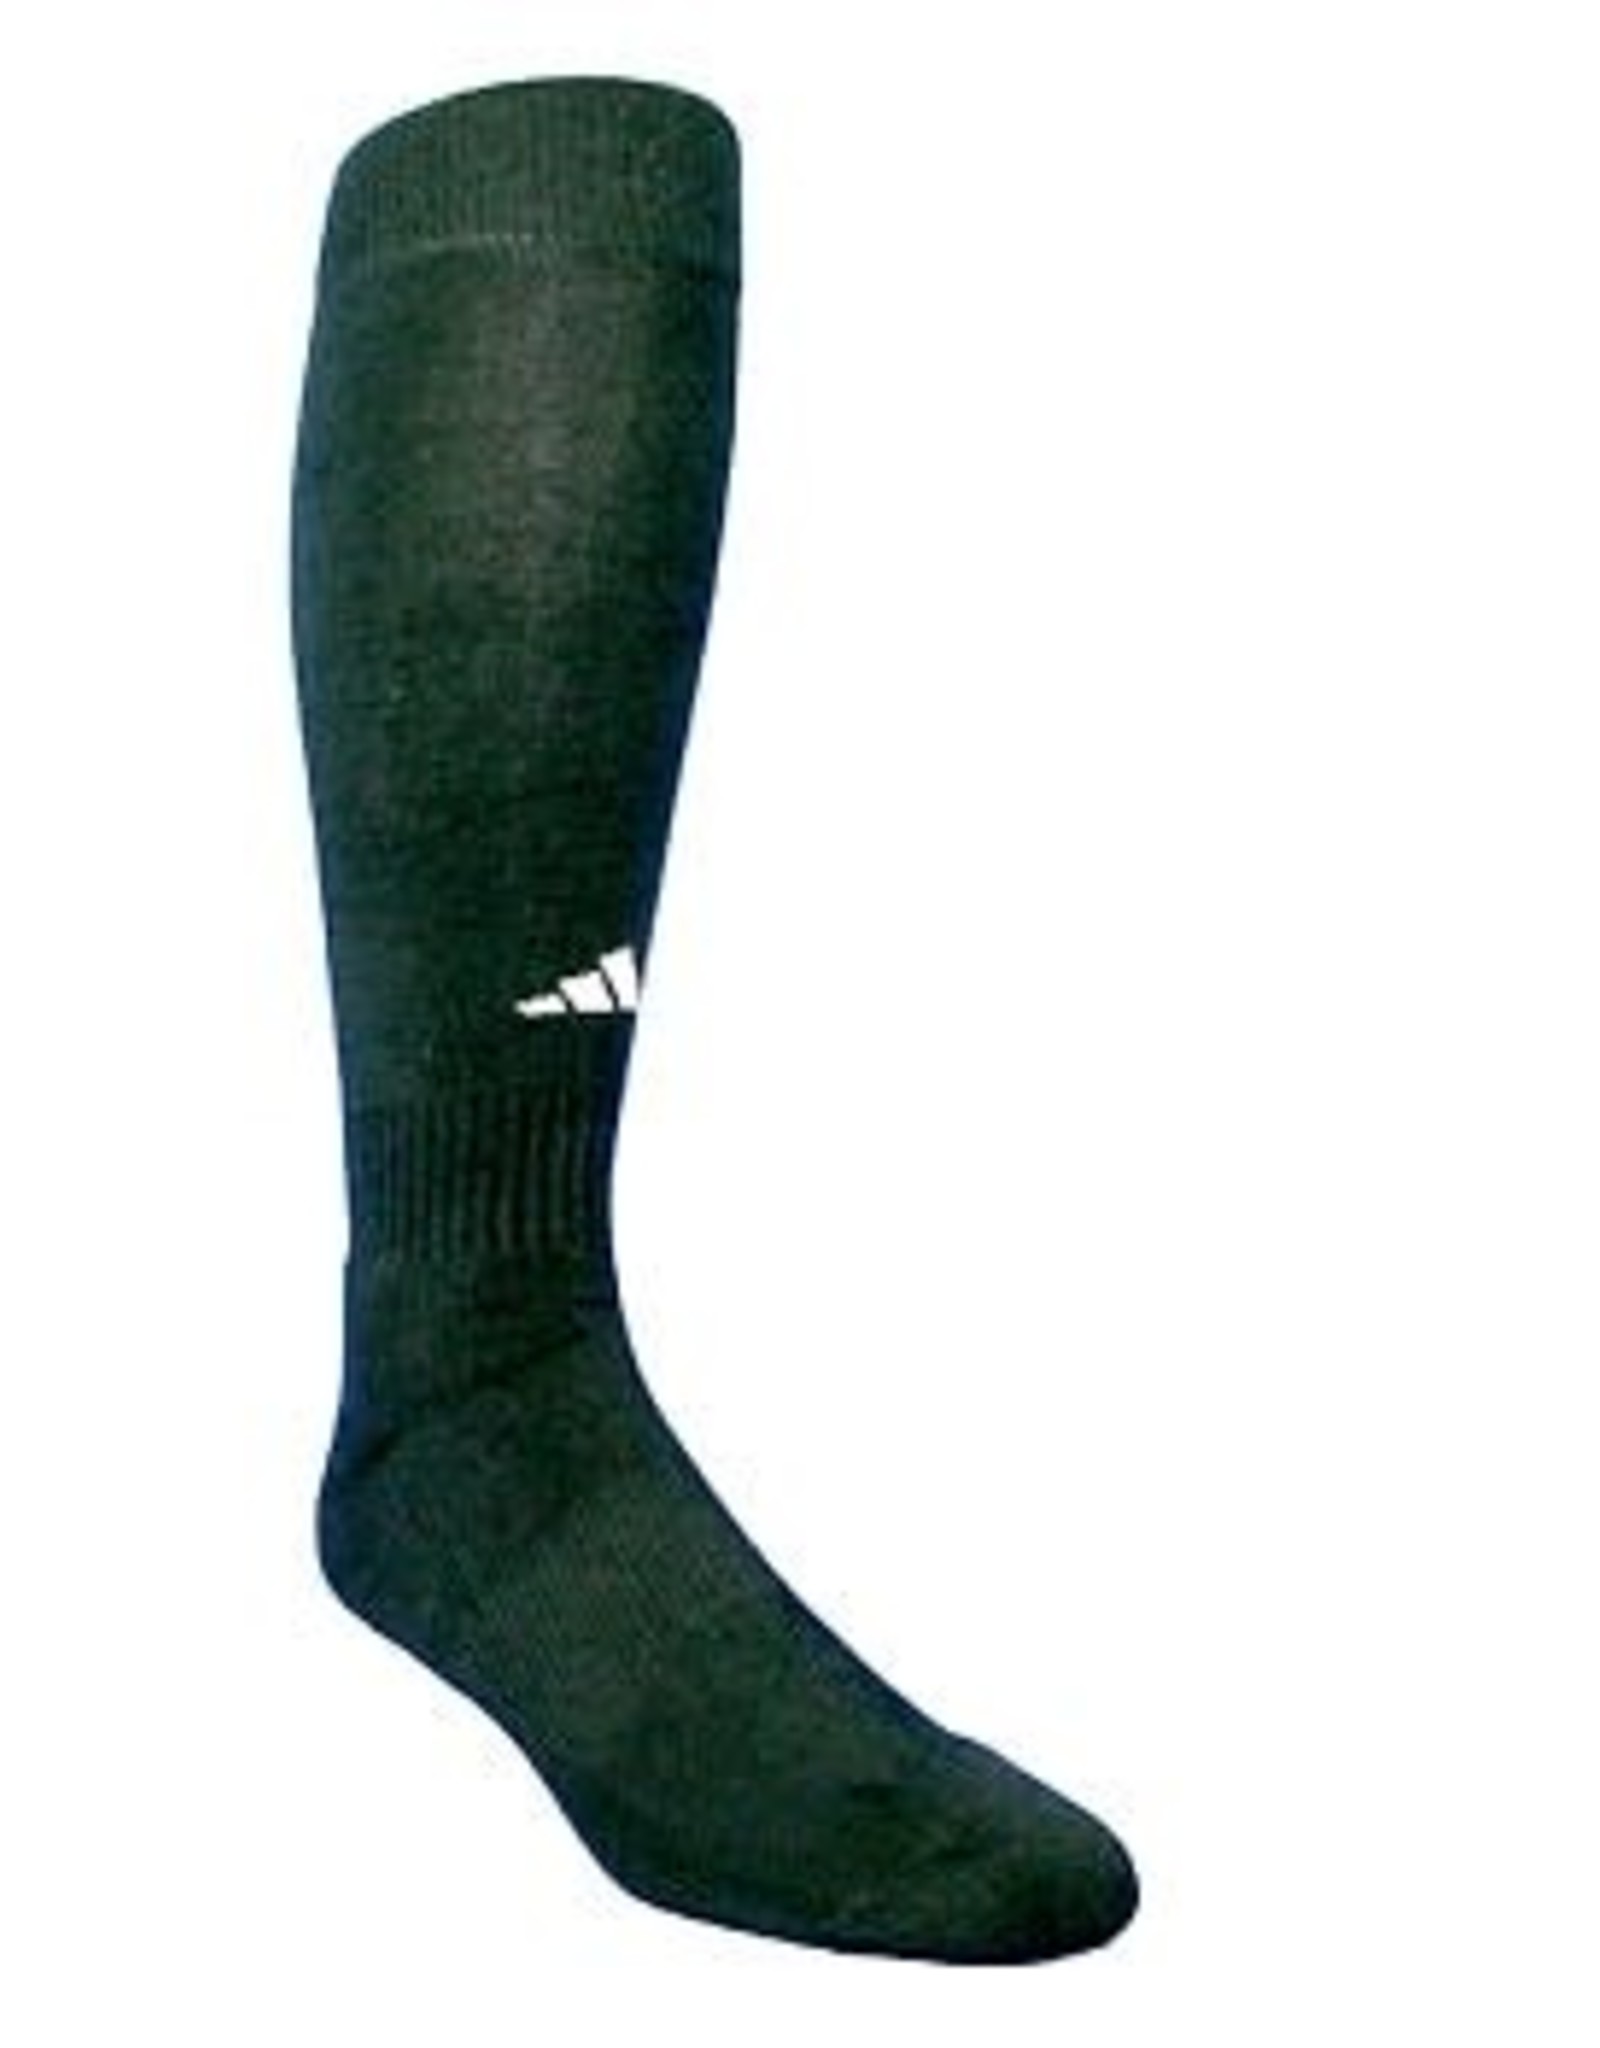 Adidas Field Sock 11